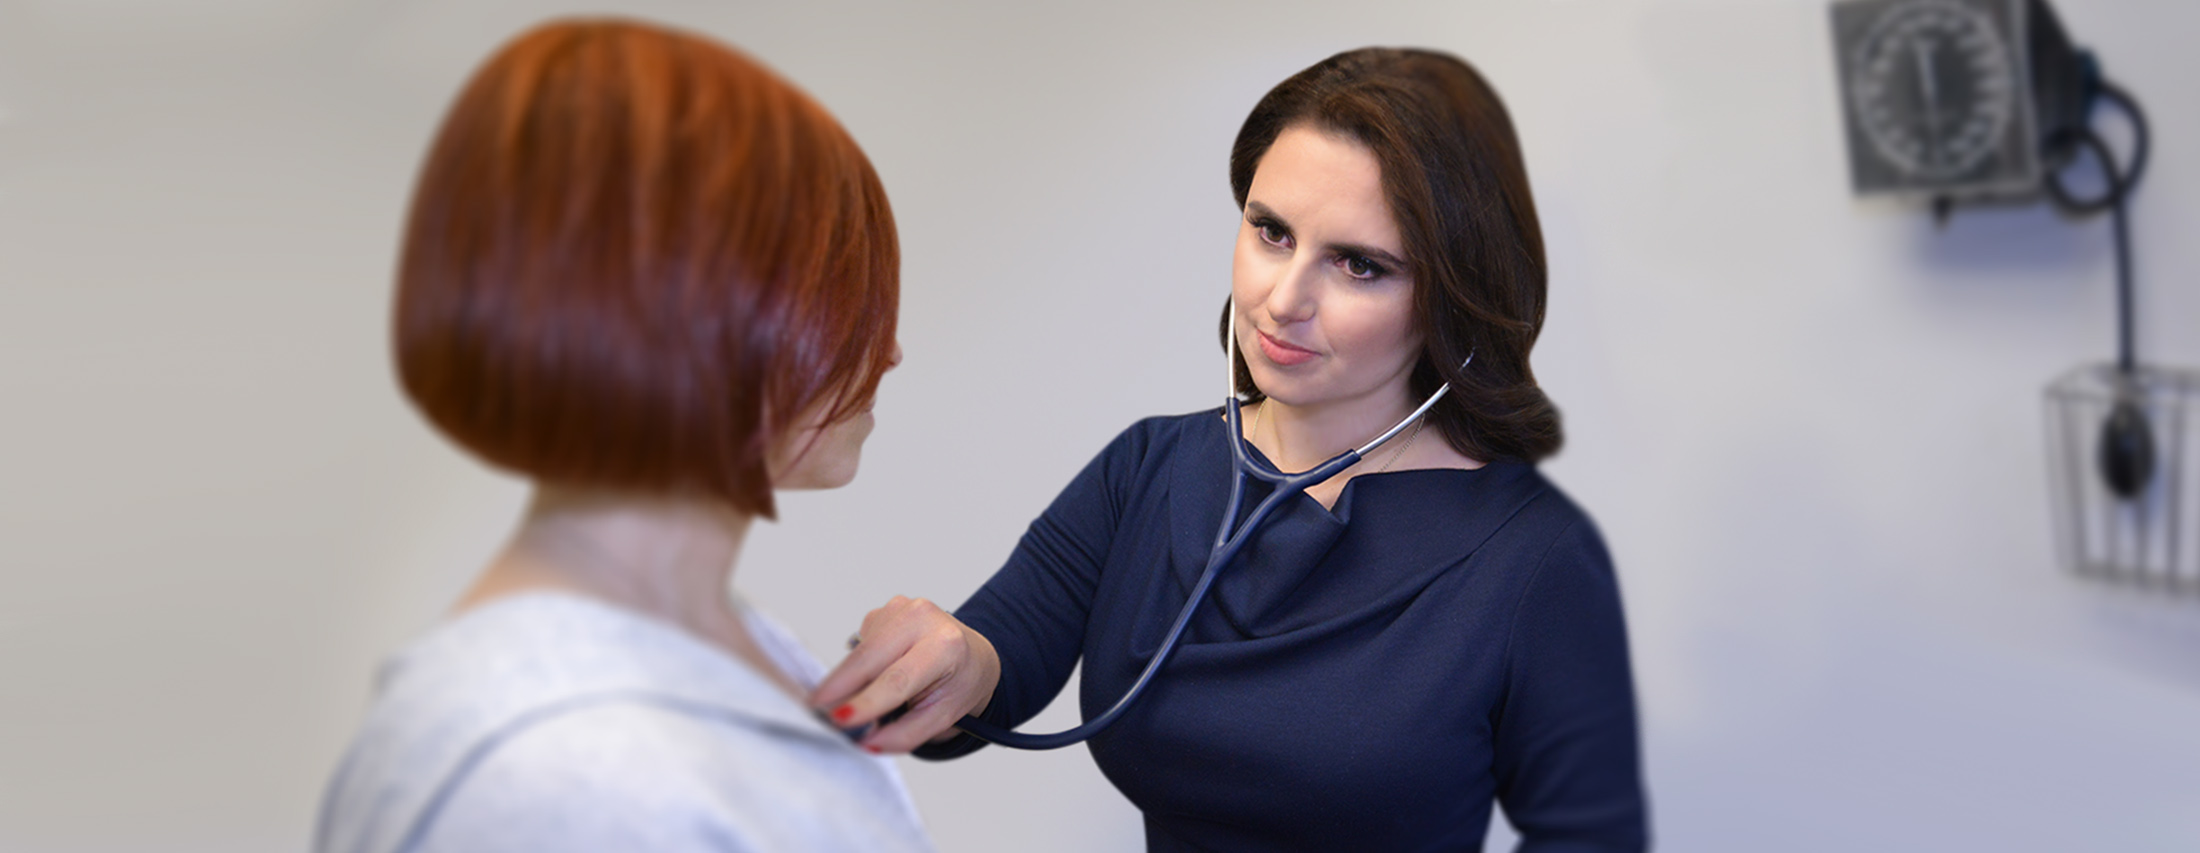 Dr. Caryn Borger examines a patient